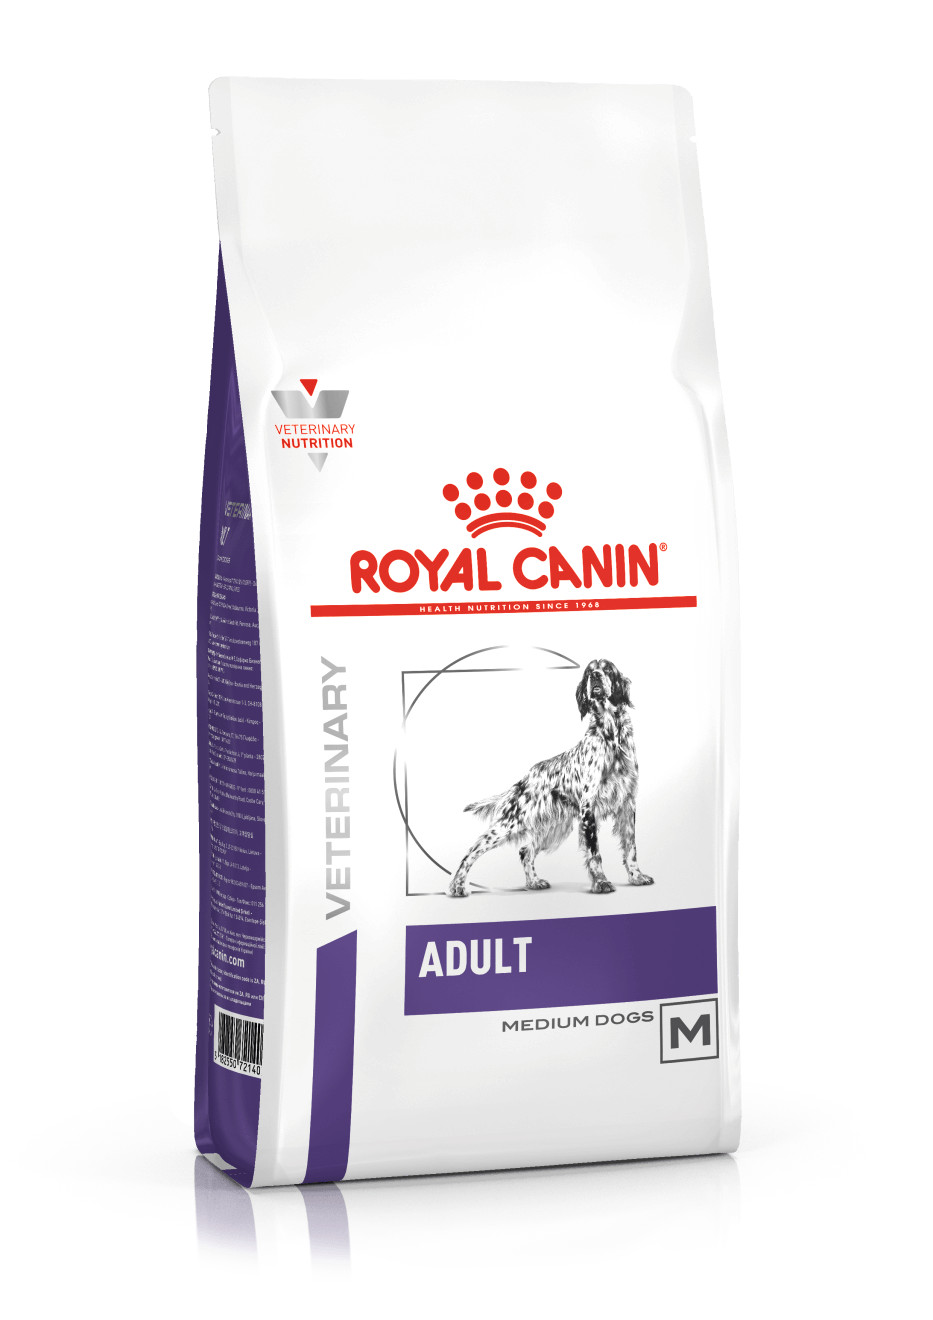 Royal Canin Expert Adult Medium pour chien